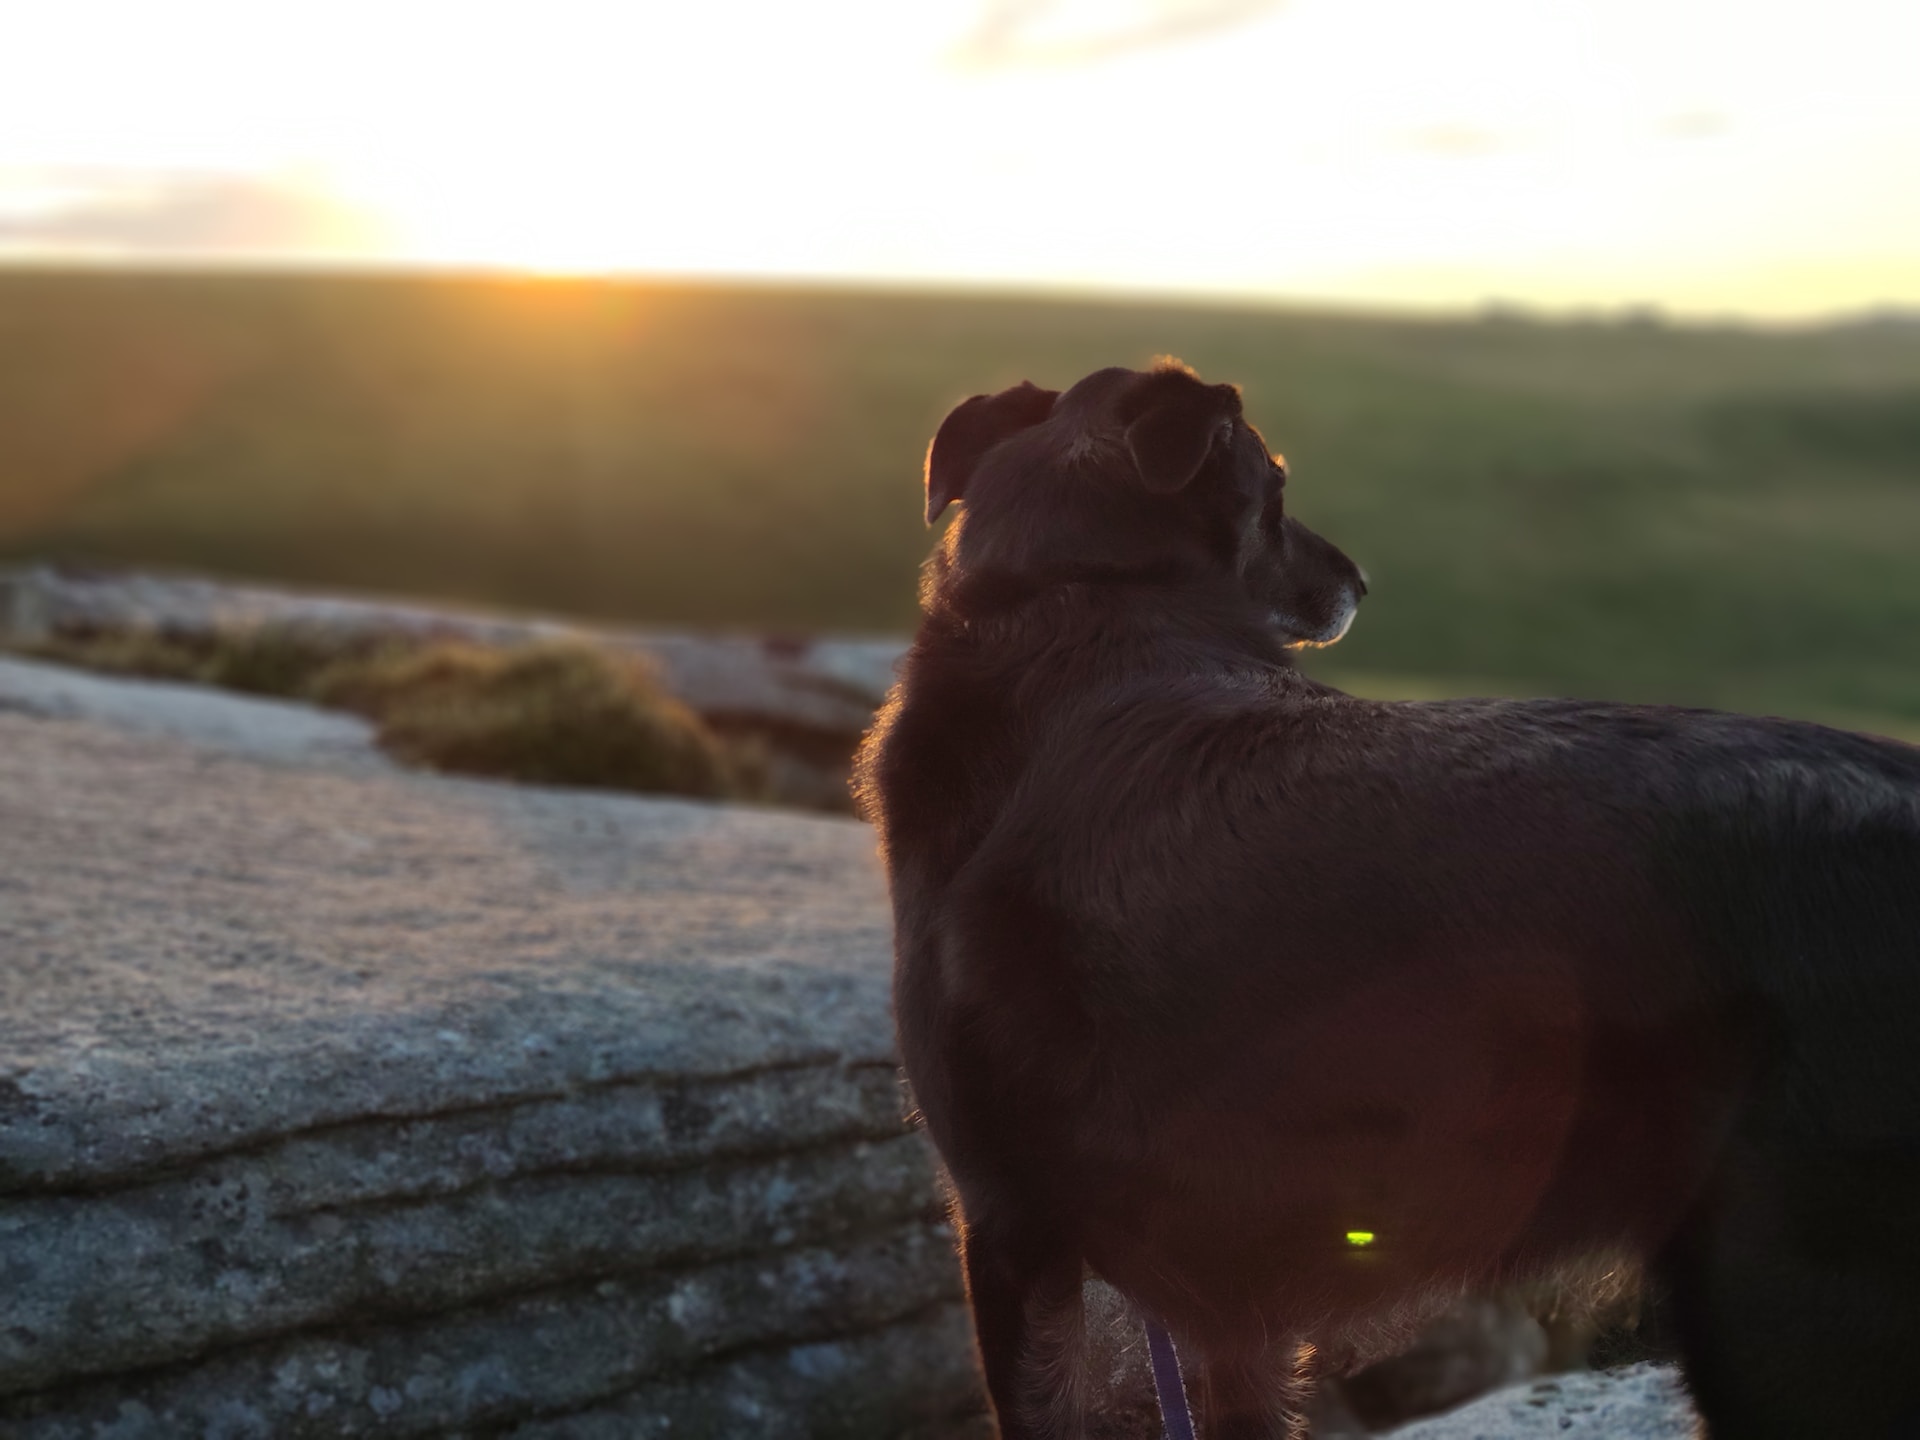 Dog on Dartmoor